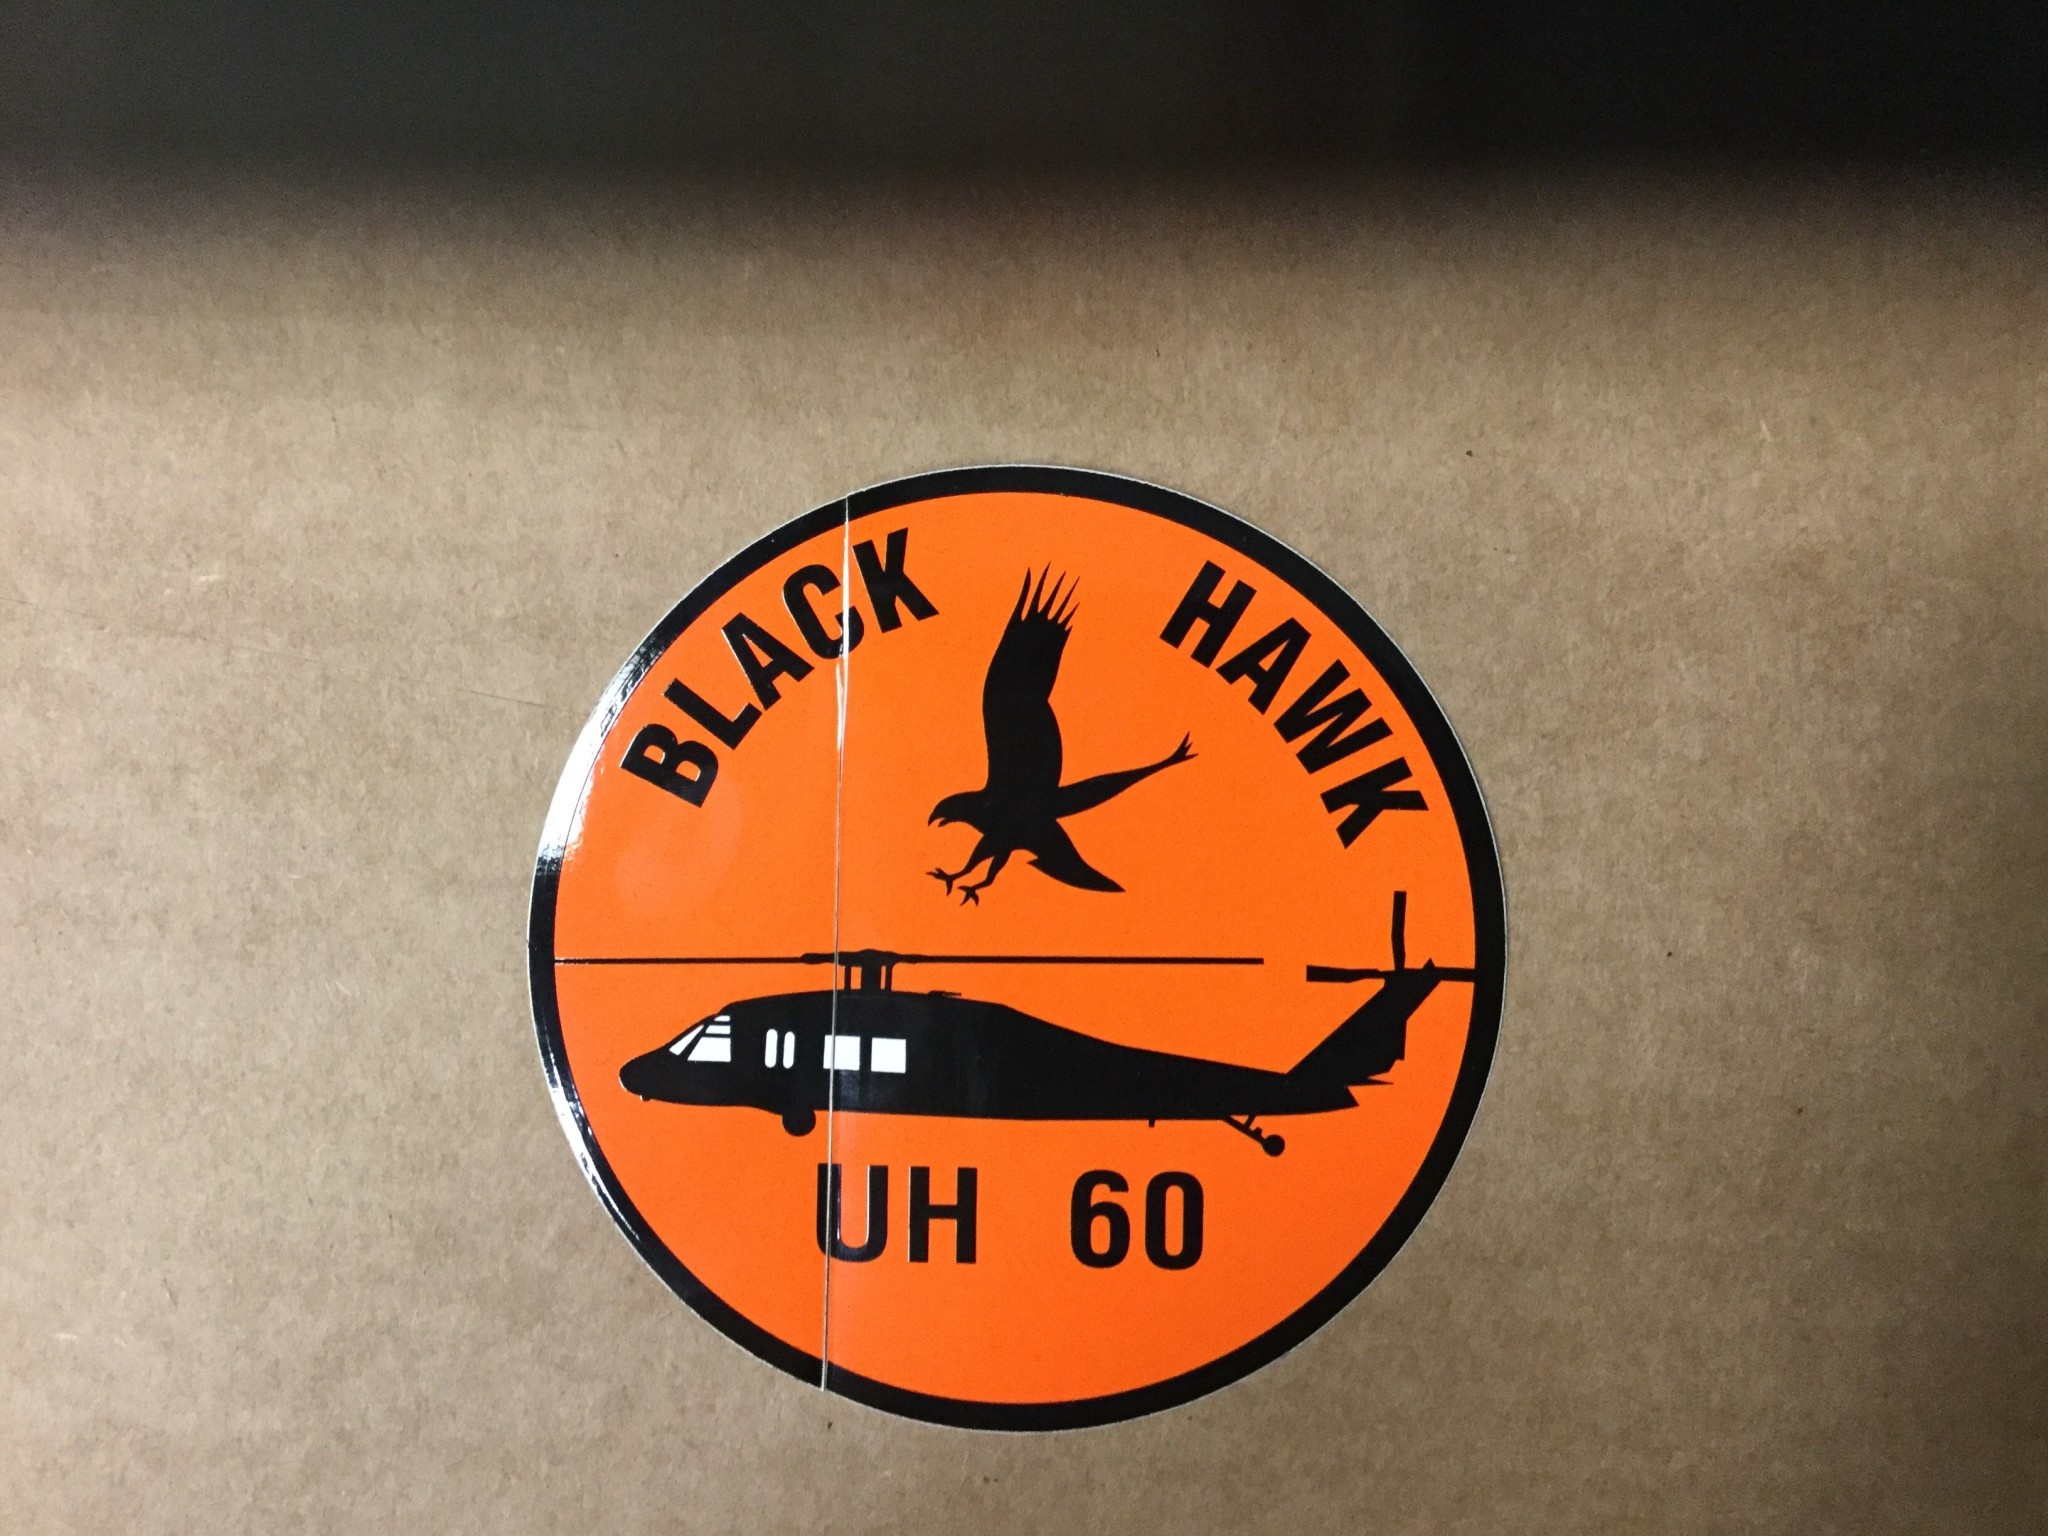 BLACKHAWK UH60 (ORANGE)